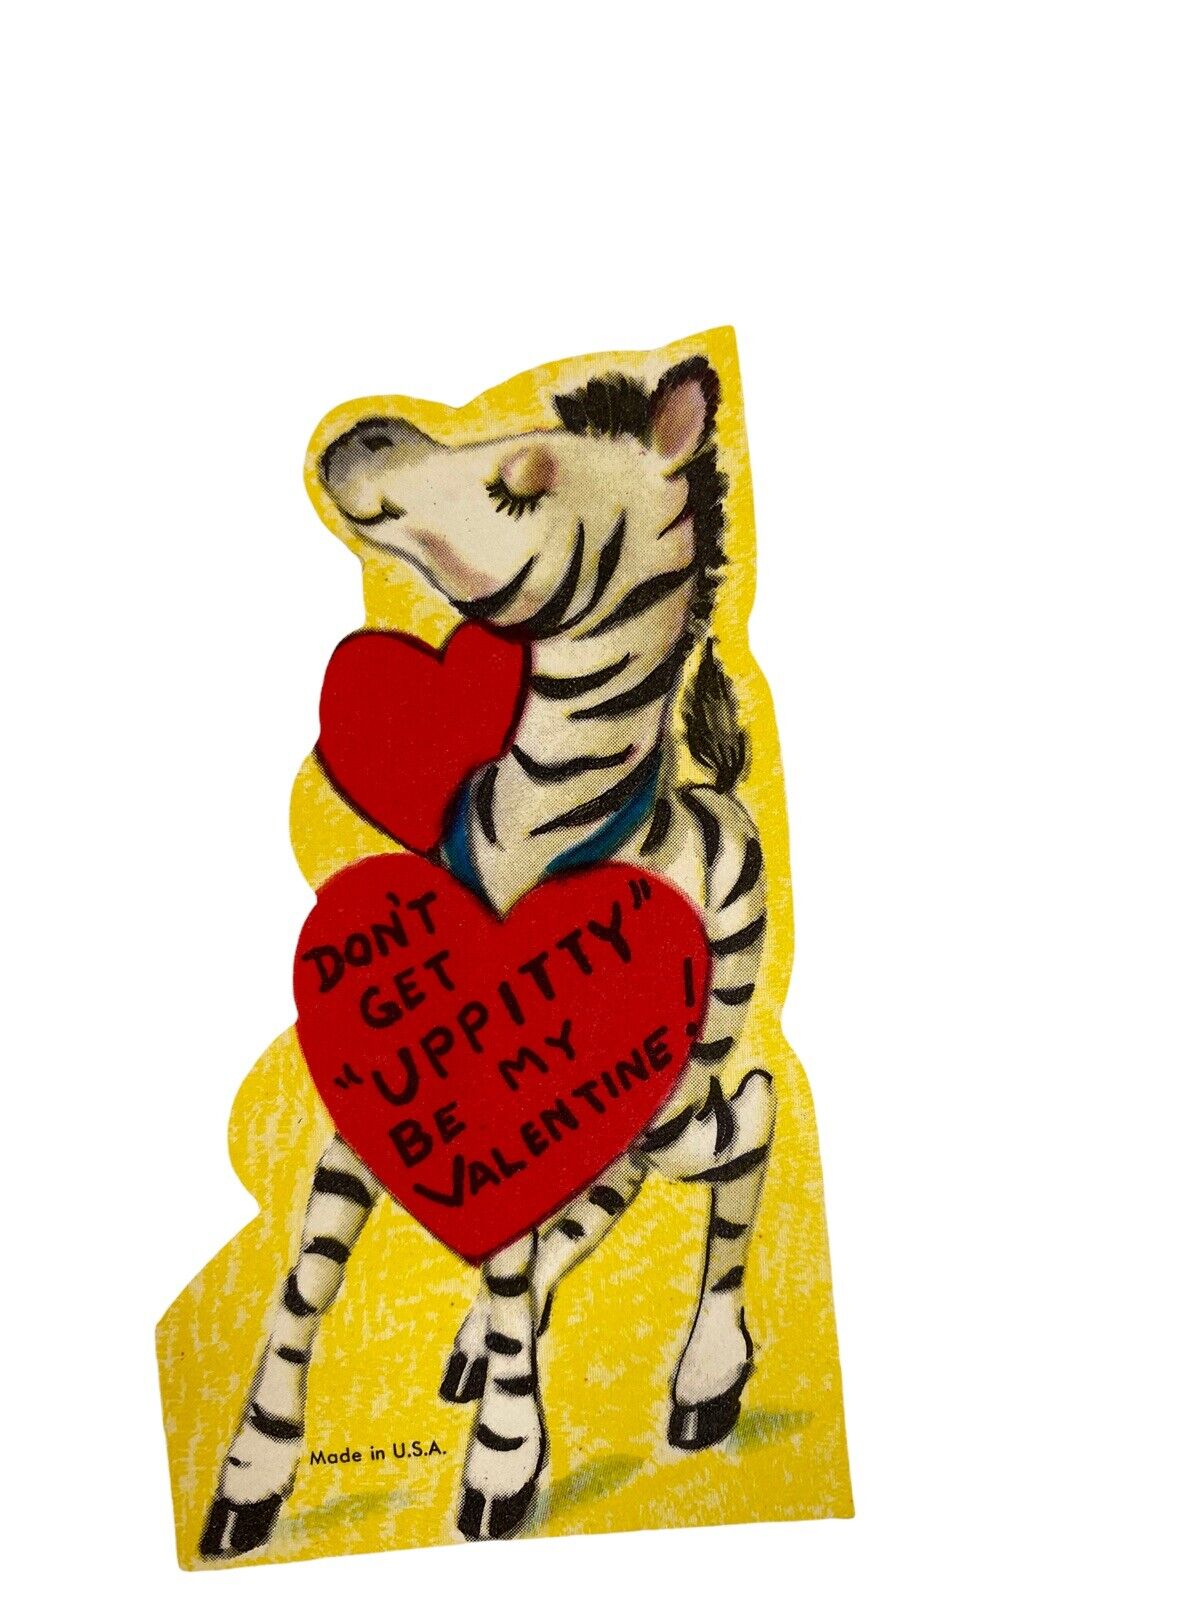 Vintage Valentine Zebra Heart Card Collection Dont Get Uppitty Be My Valentine